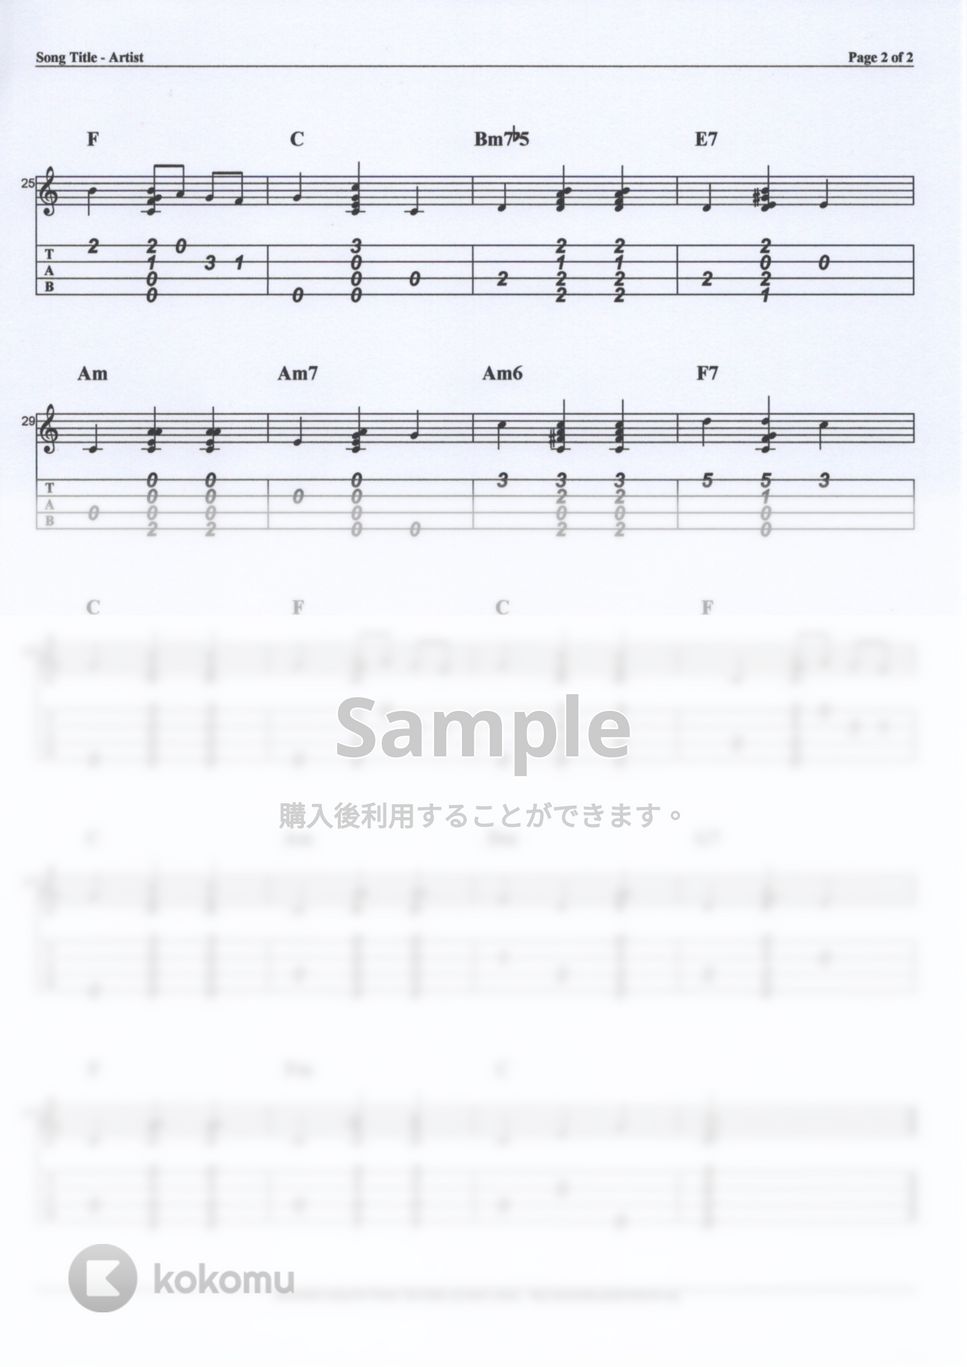 Henry Mancini - Moon River (Ukulele Solo /High G) by MASA Kahiwa